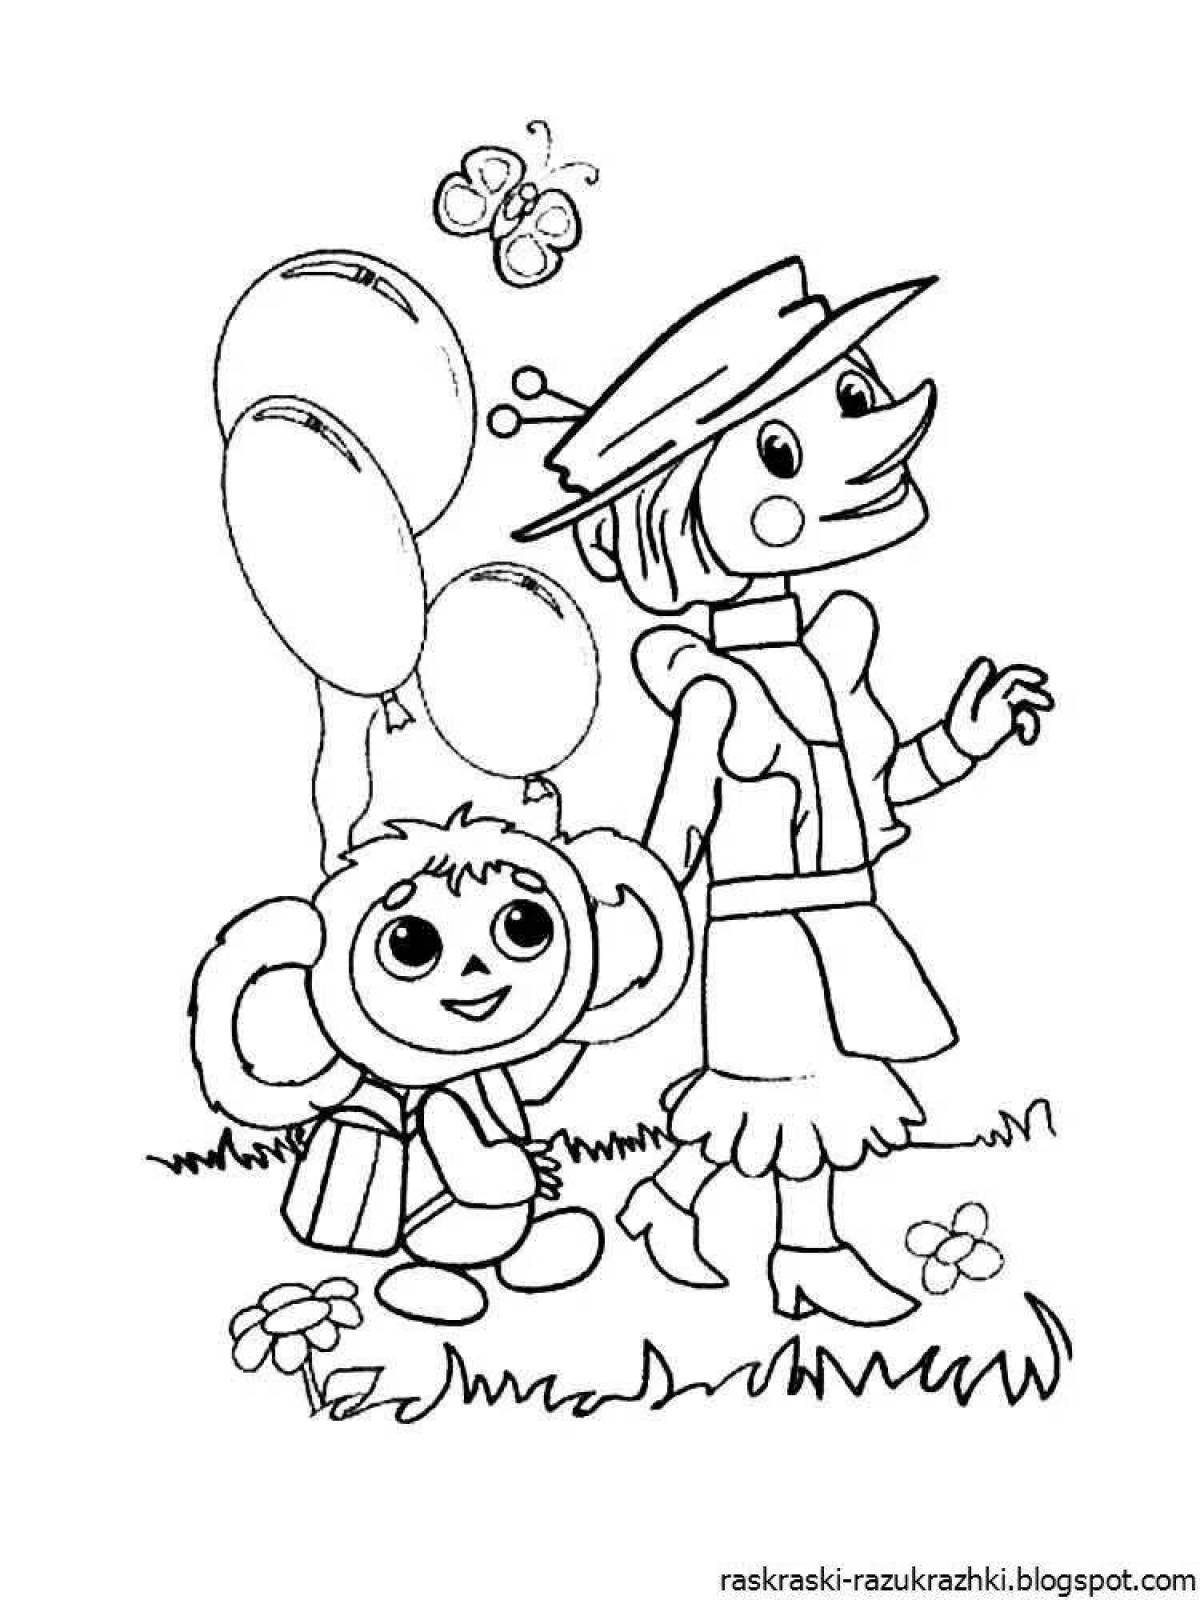 Cheburashka coloring book for children 5-6 years old